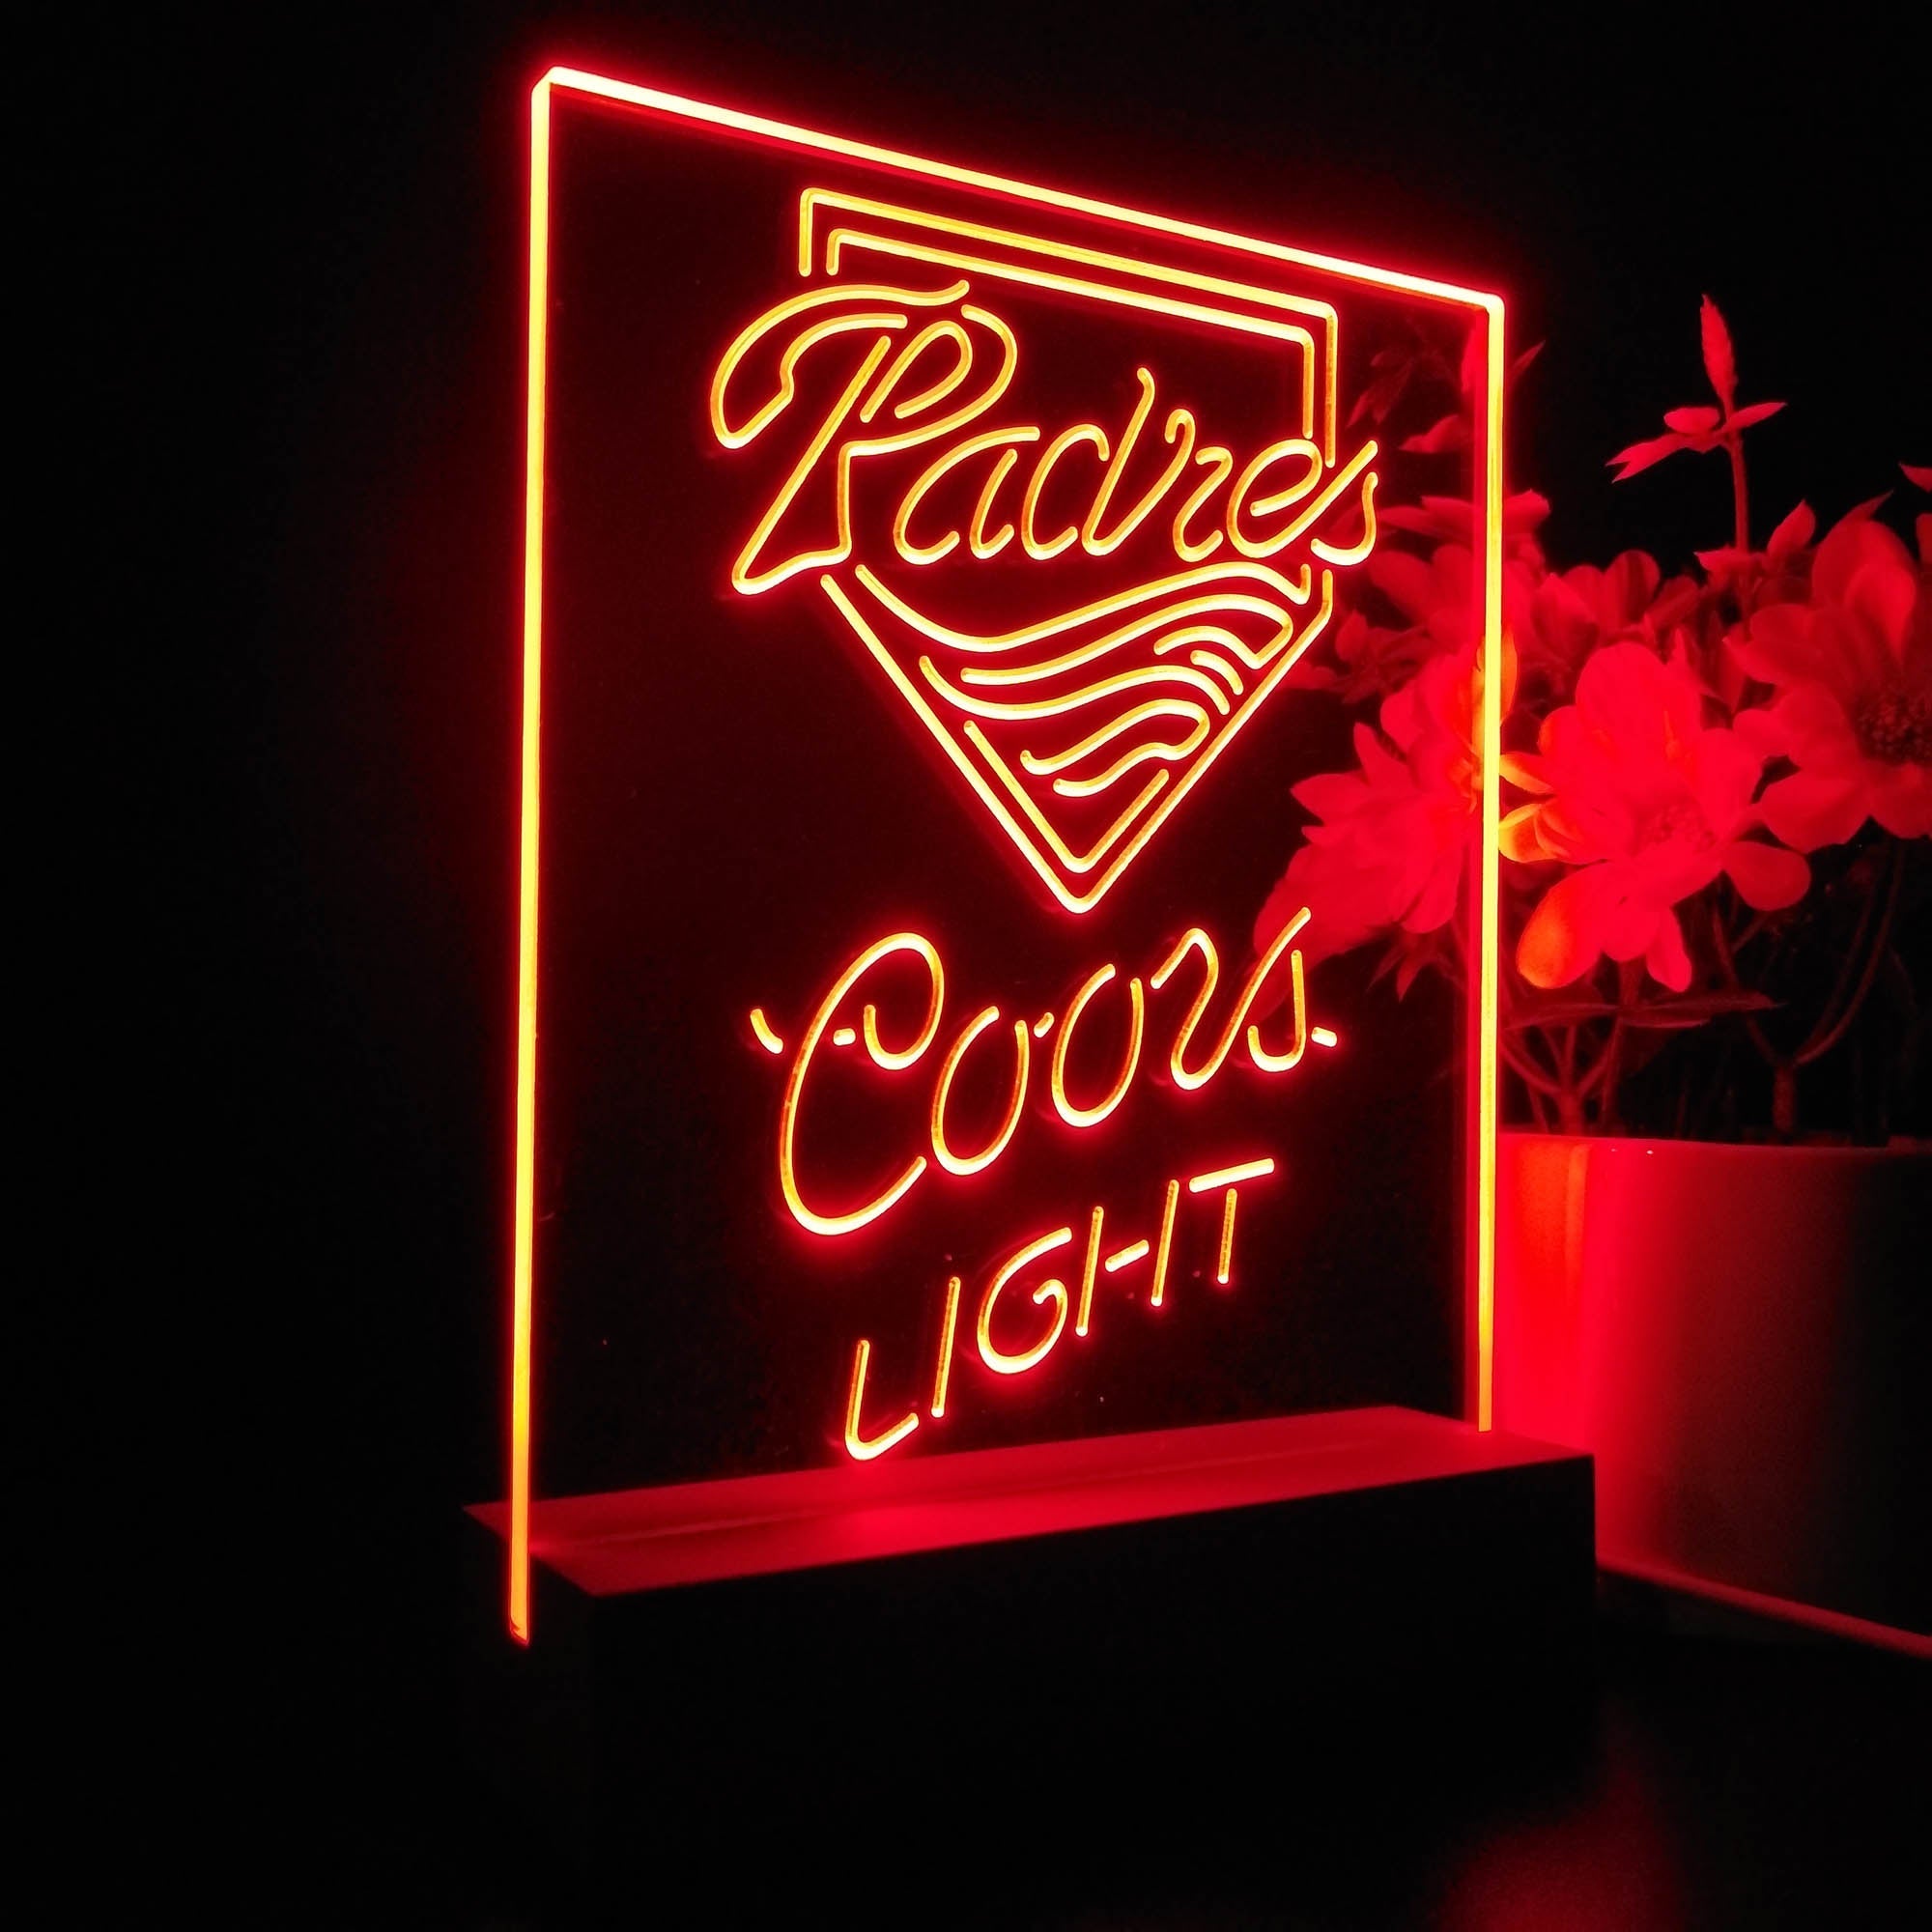 San Diego Padres Coors Light Neon Sign Pub Bar Lamp